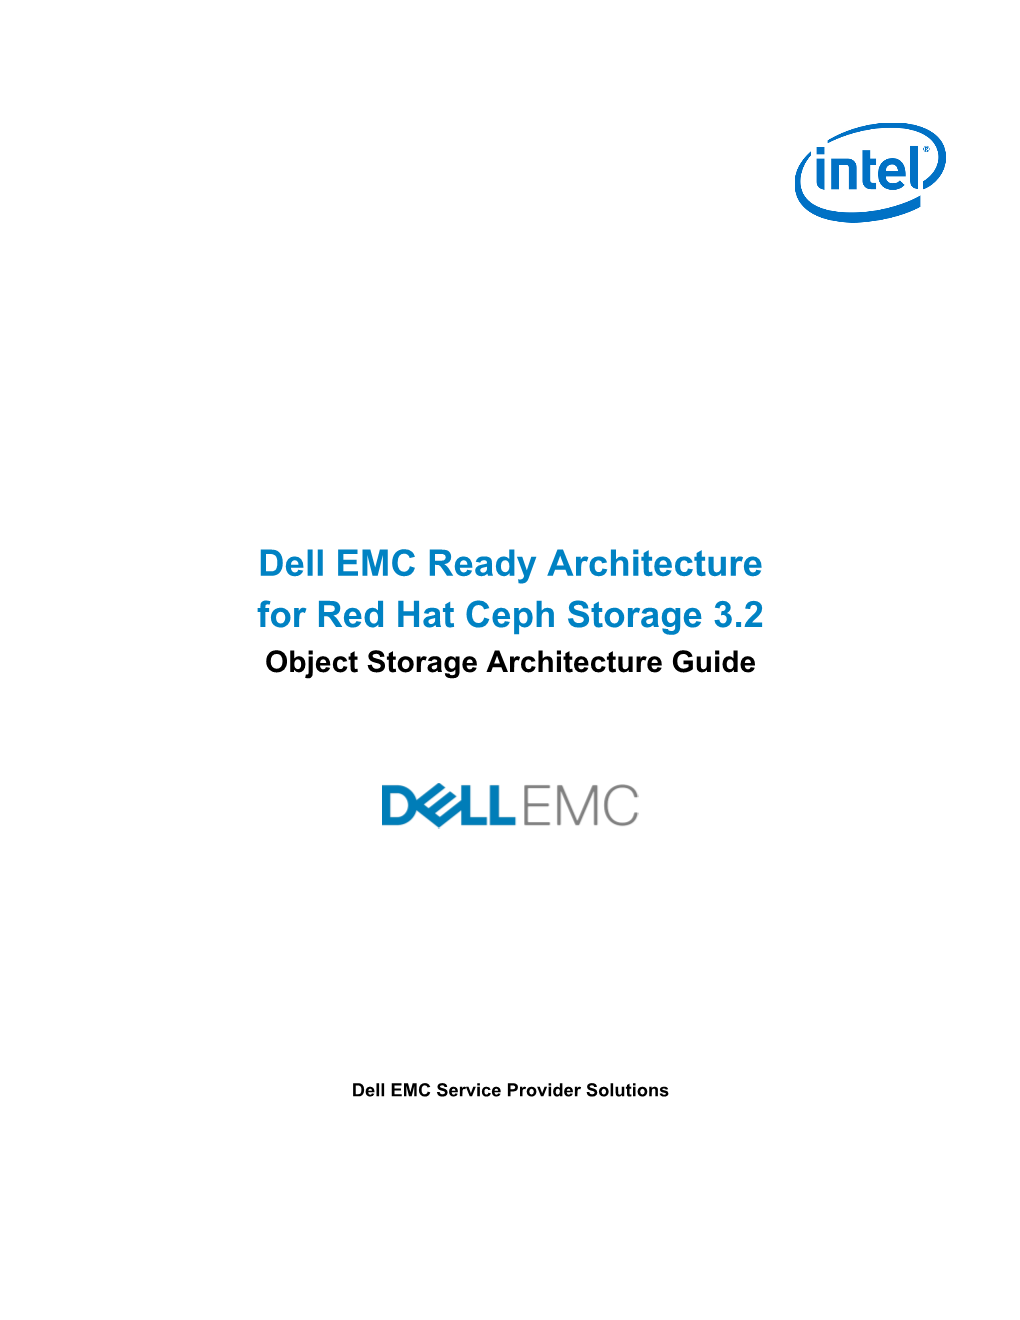 Dell EMC Ready Architecture for Red Hat Ceph Storage 3.2 Object Storage Architecture Guide